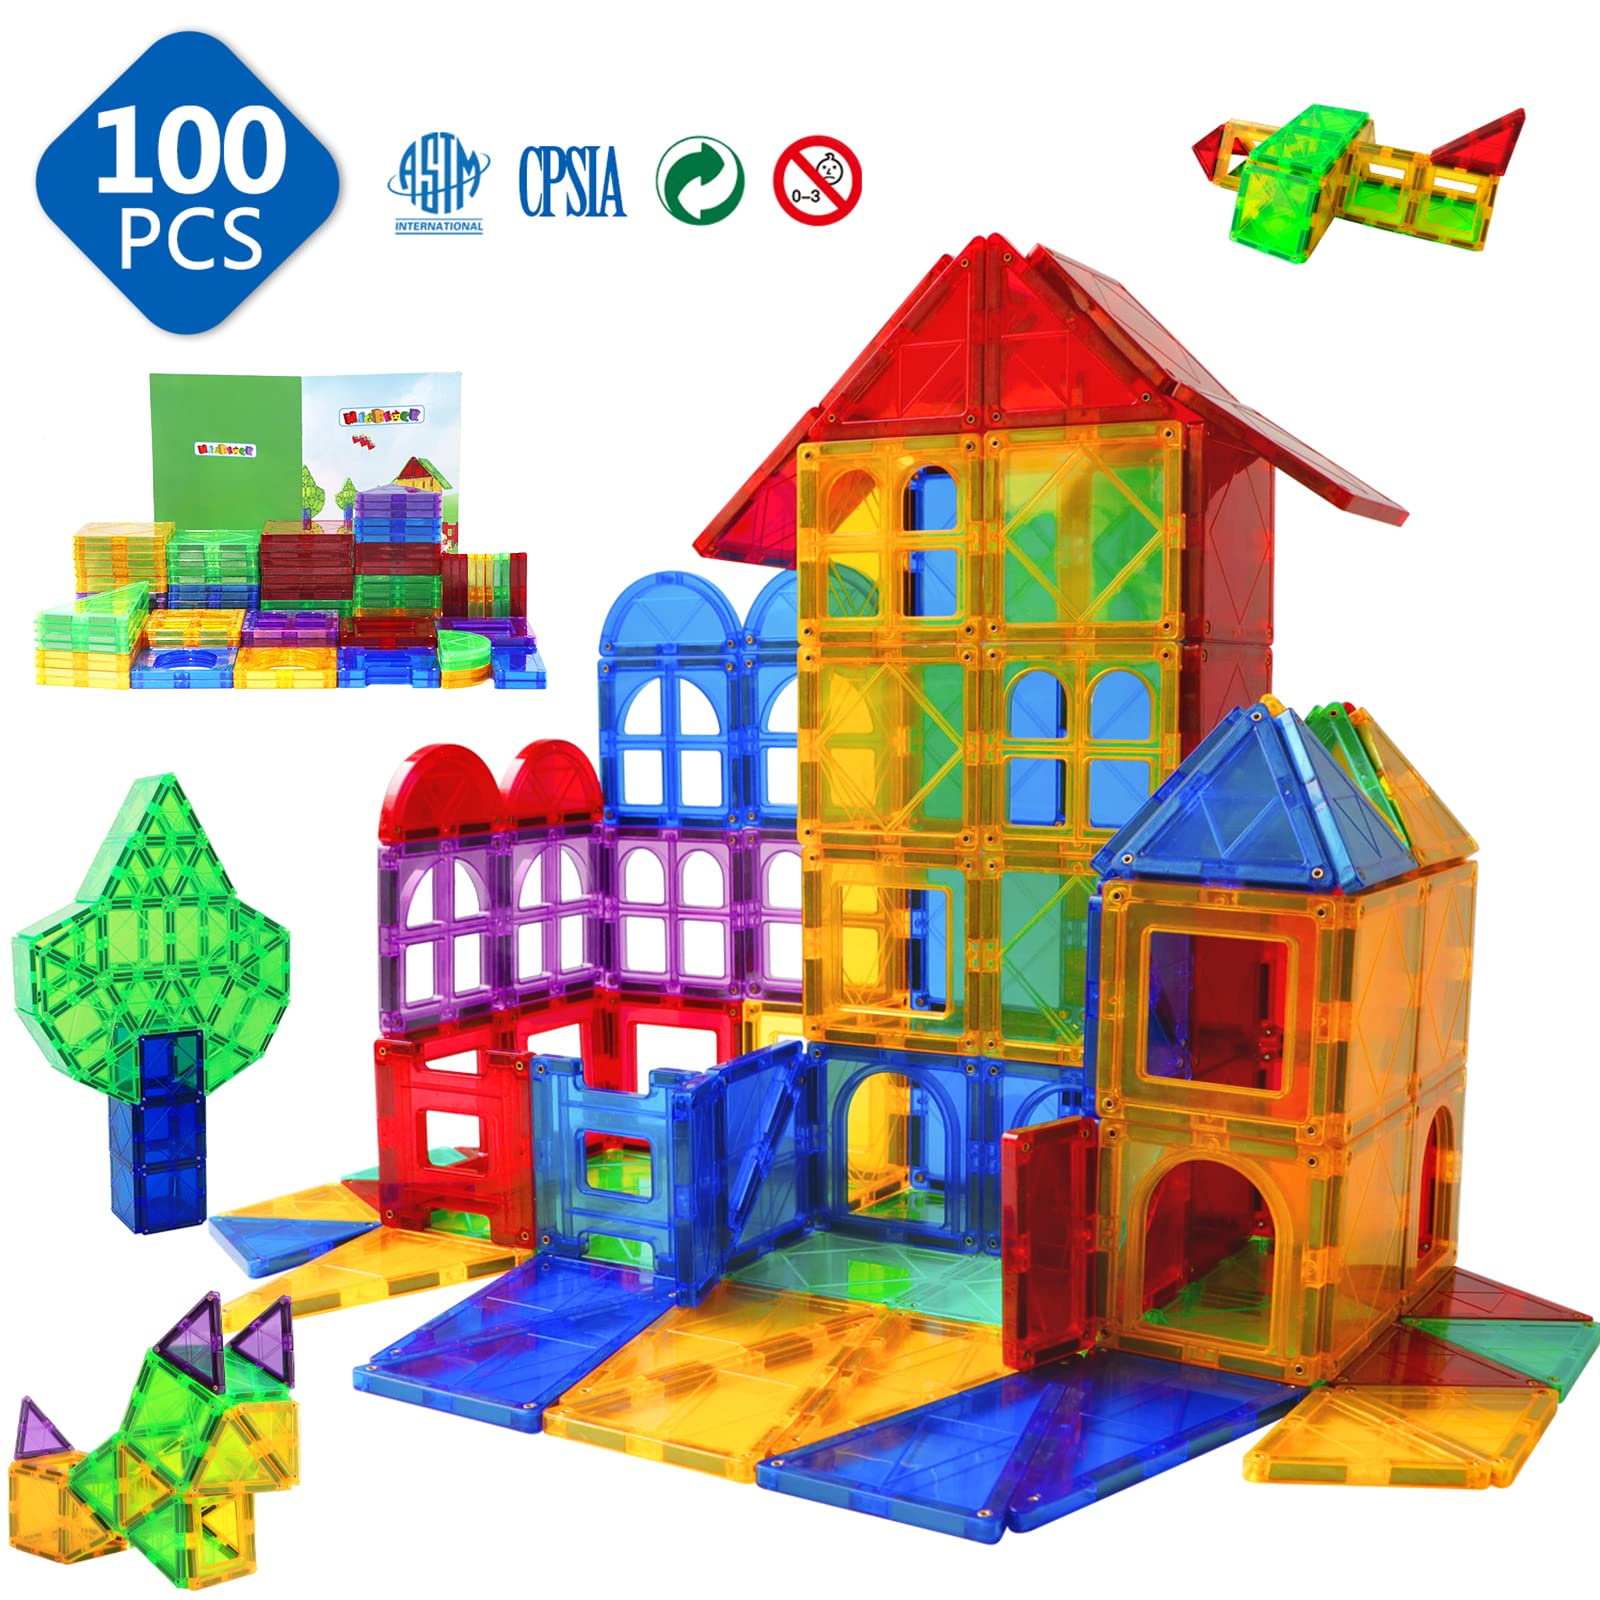 MAGBLOCK Magnet Toys Kids Magnetic Building Tiles 100 Pcs 3D Magnetic Blocks Preschool Building Sets Educational Toys for Toddlers Boys and Girls.